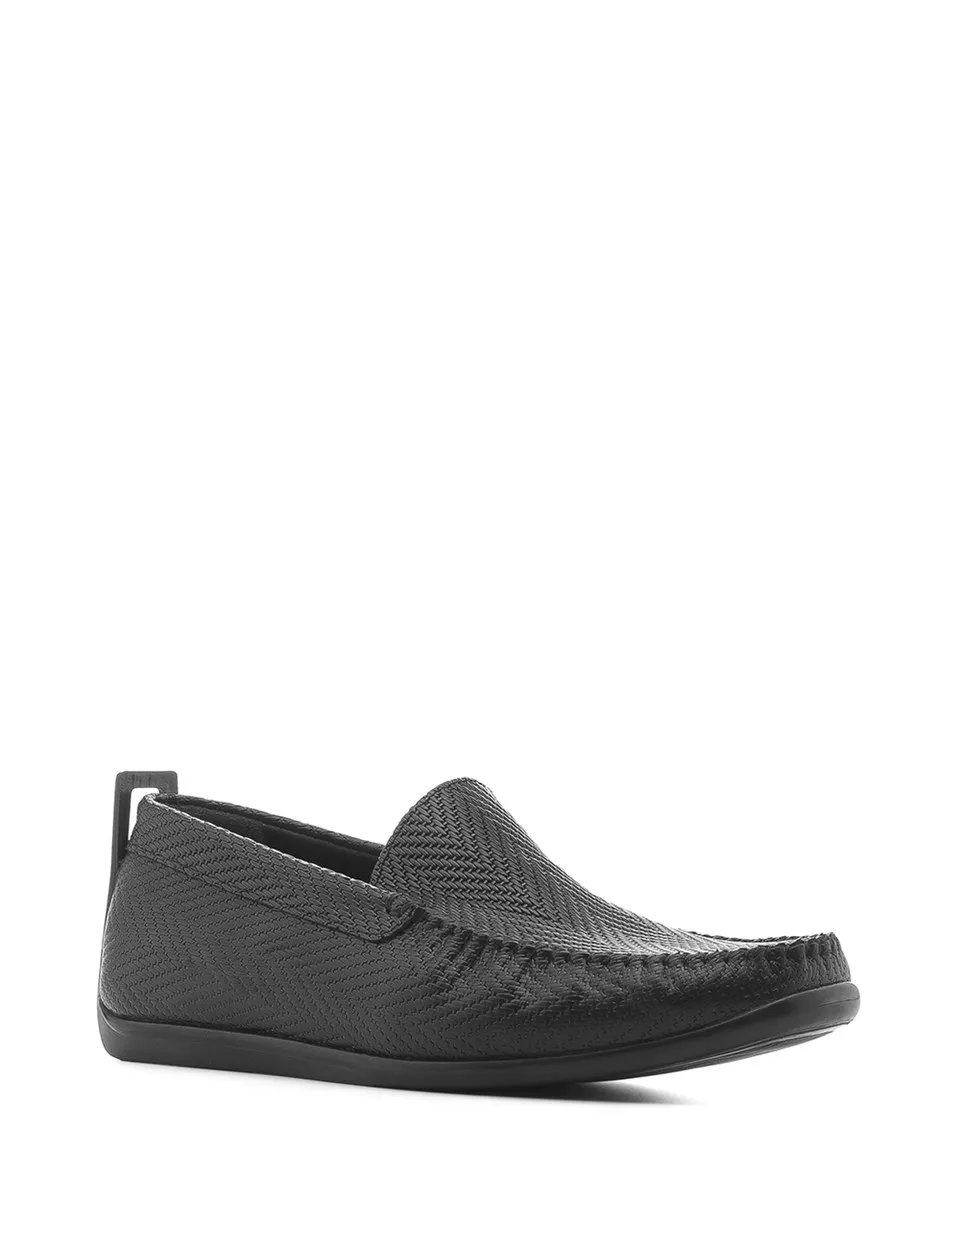 

ILVi-Genuine Leather Handmade Adal Men's Moccasin Black Leather Men Shoes 2020 Spring Summer (Made in Turkey)